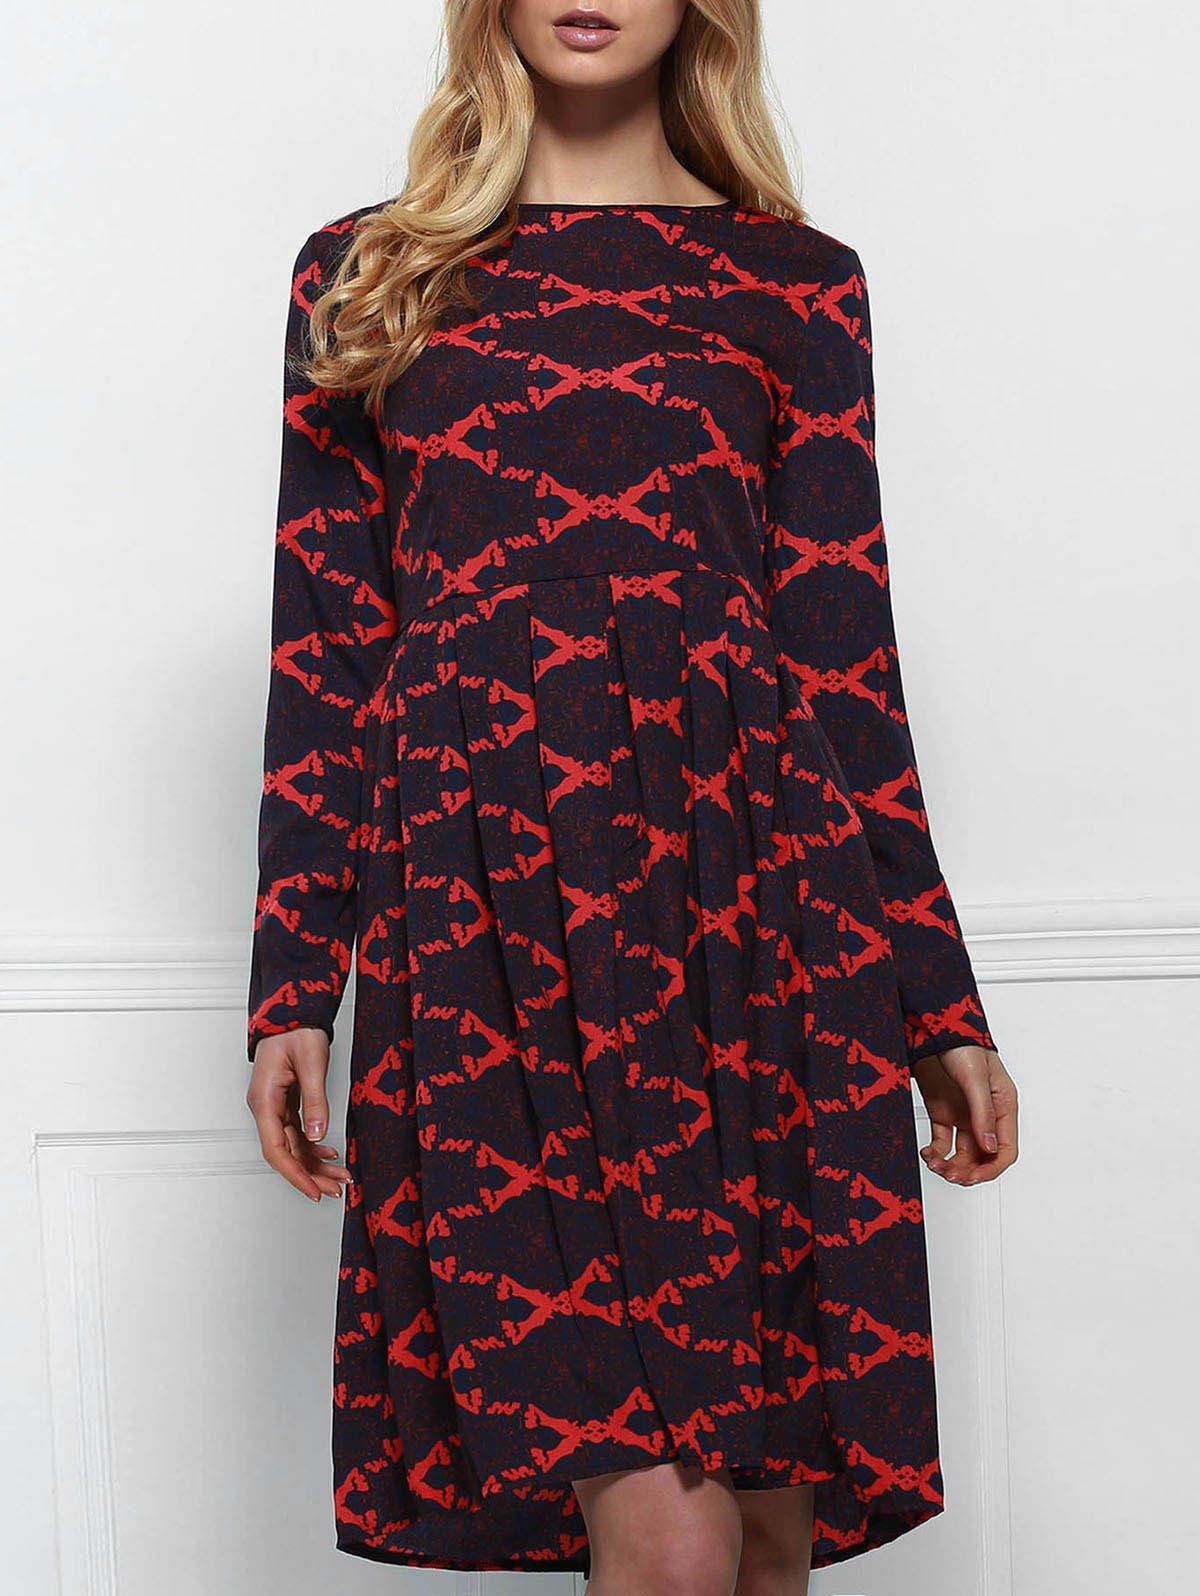 Retro Style Rhombus Printed High Waist Long Sleeve Ball Gown Dress For Women - DEEP RED M